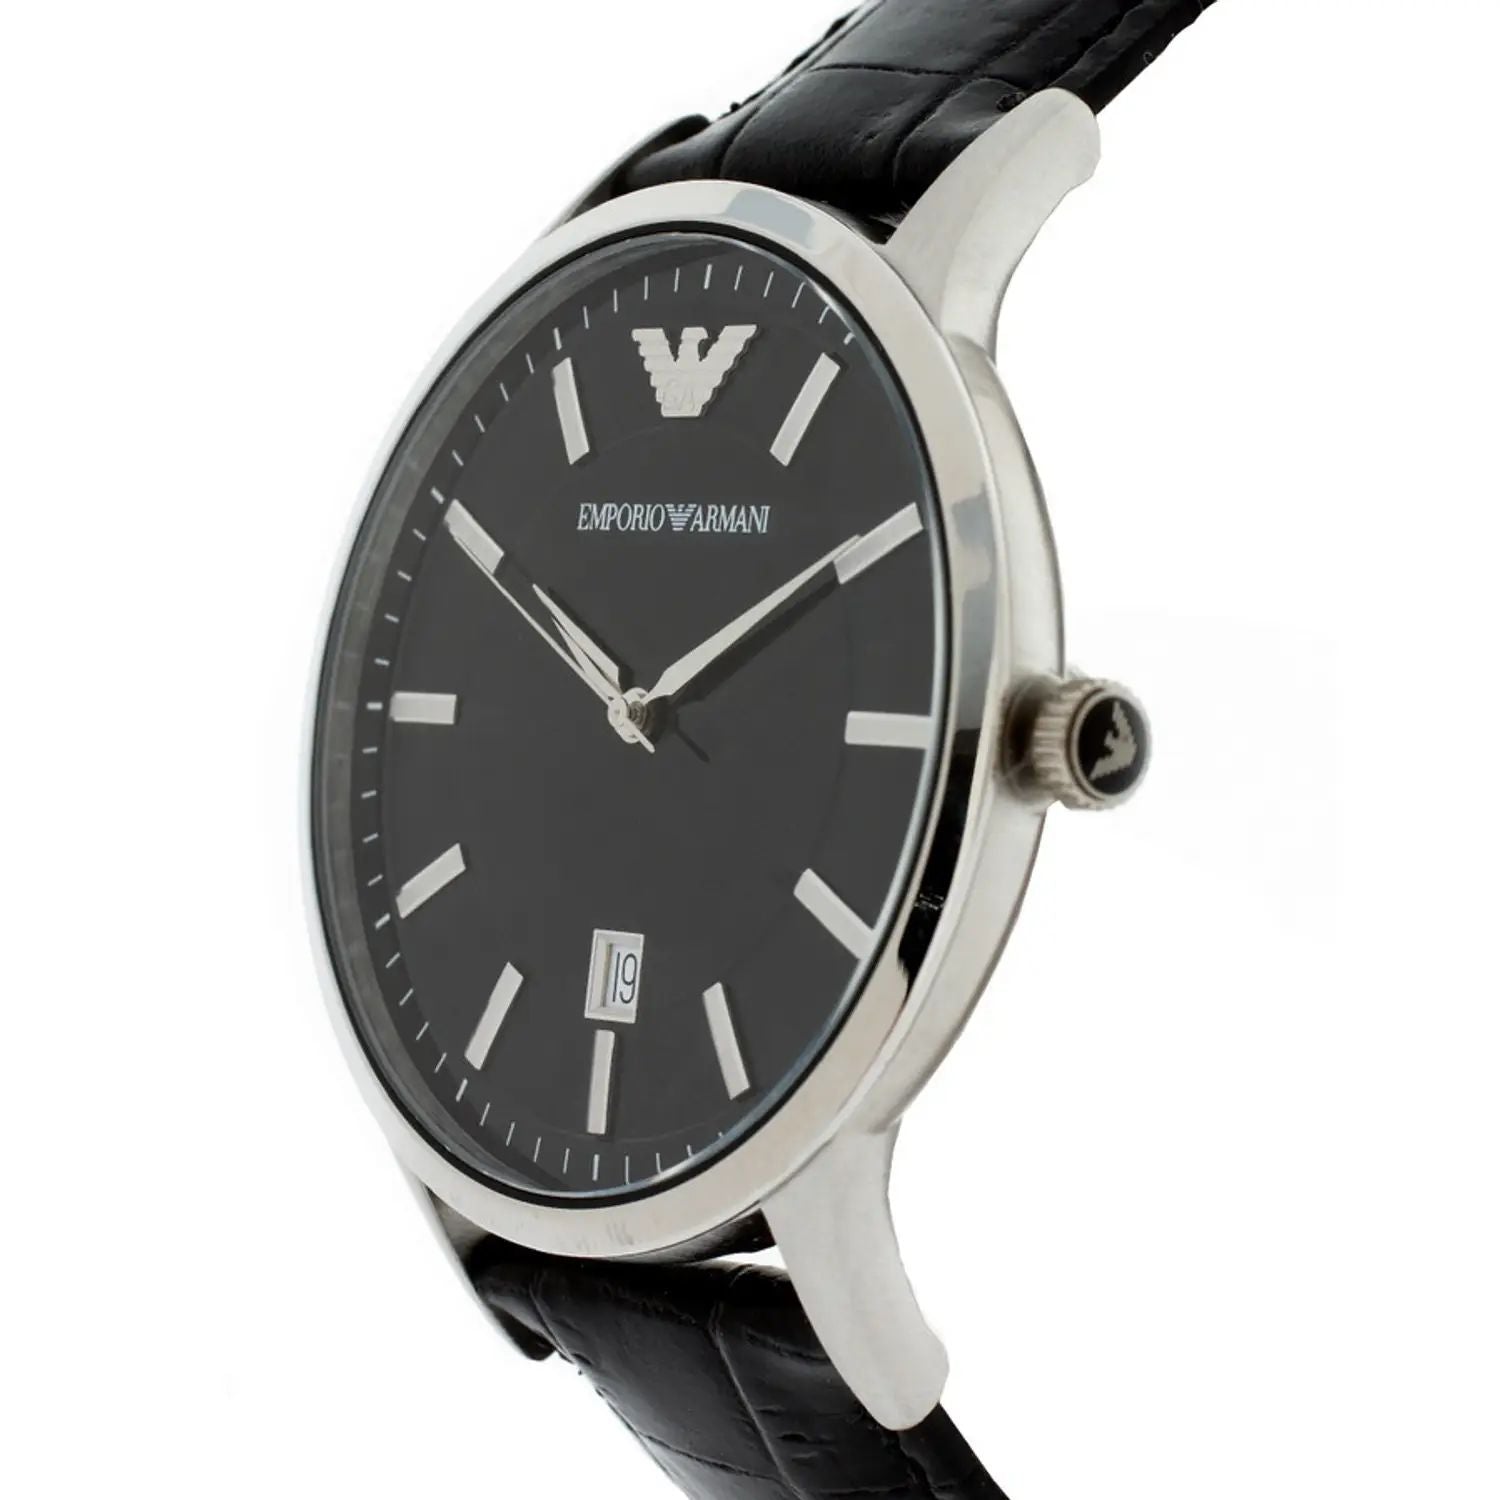 Emporio Armani Sleek Aviator Inspired Men's Wristwatch